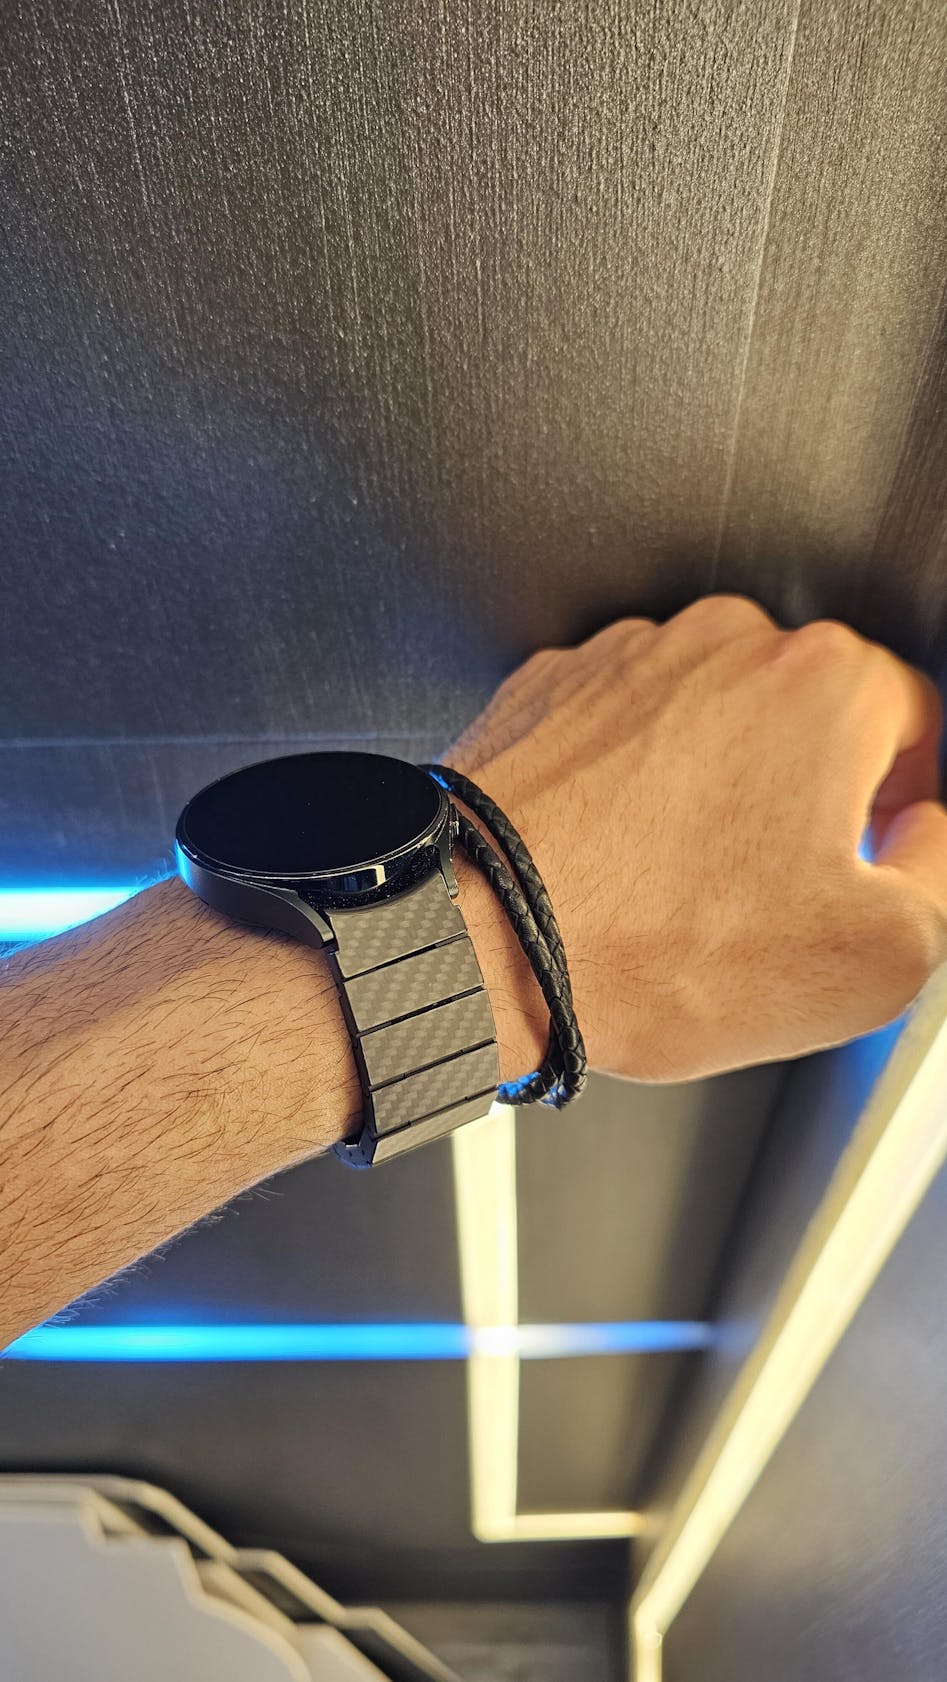 PITAKA - Galaxy Watch Band (40/42/44/45/46/47mm) - 100% Carbon Fiber Adjustable Galaxy Watch Band - Thin and Comfortable